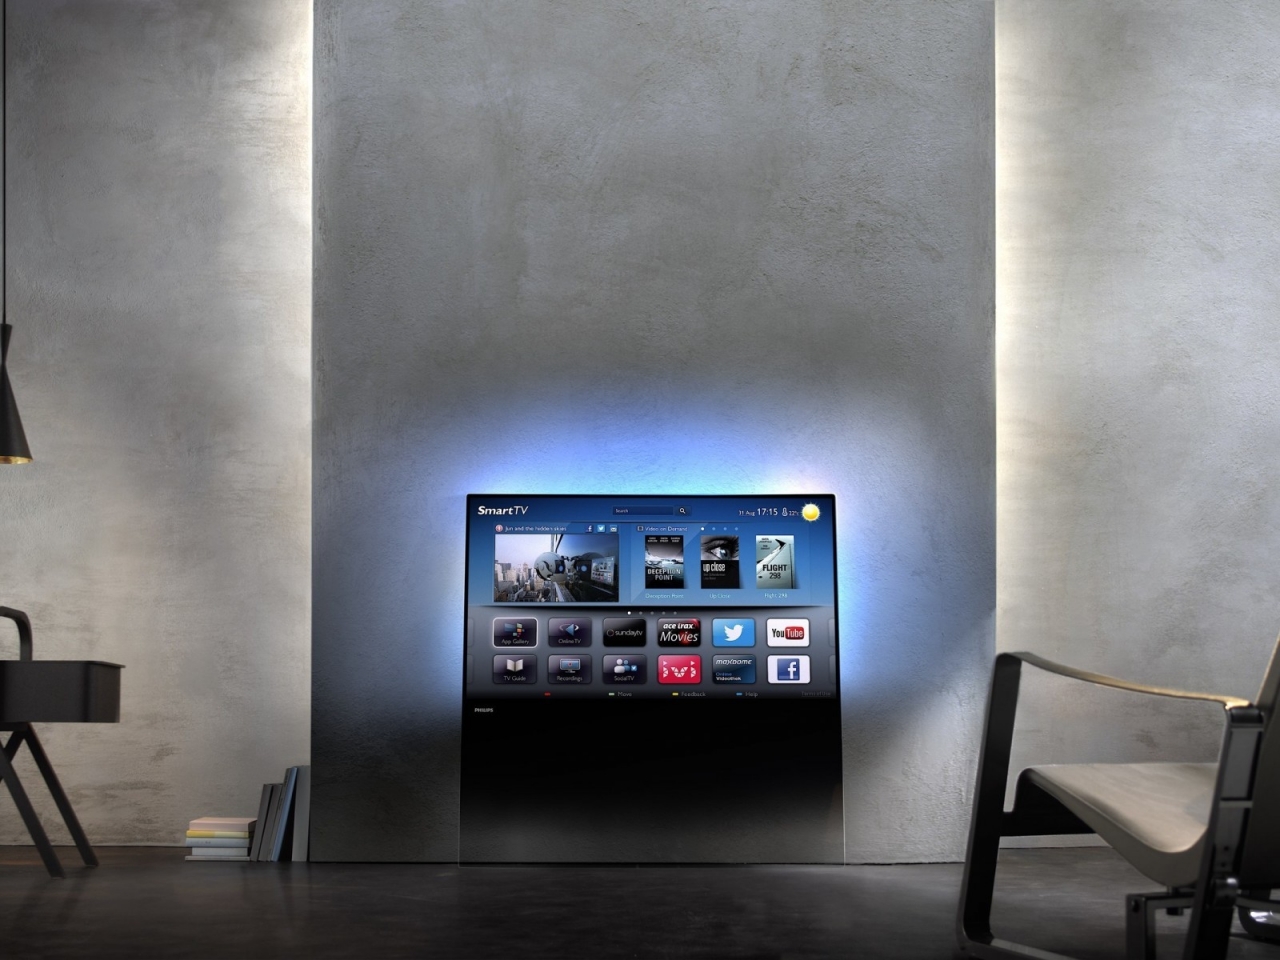 New Philips DesignLine TV for 1280 x 960 resolution